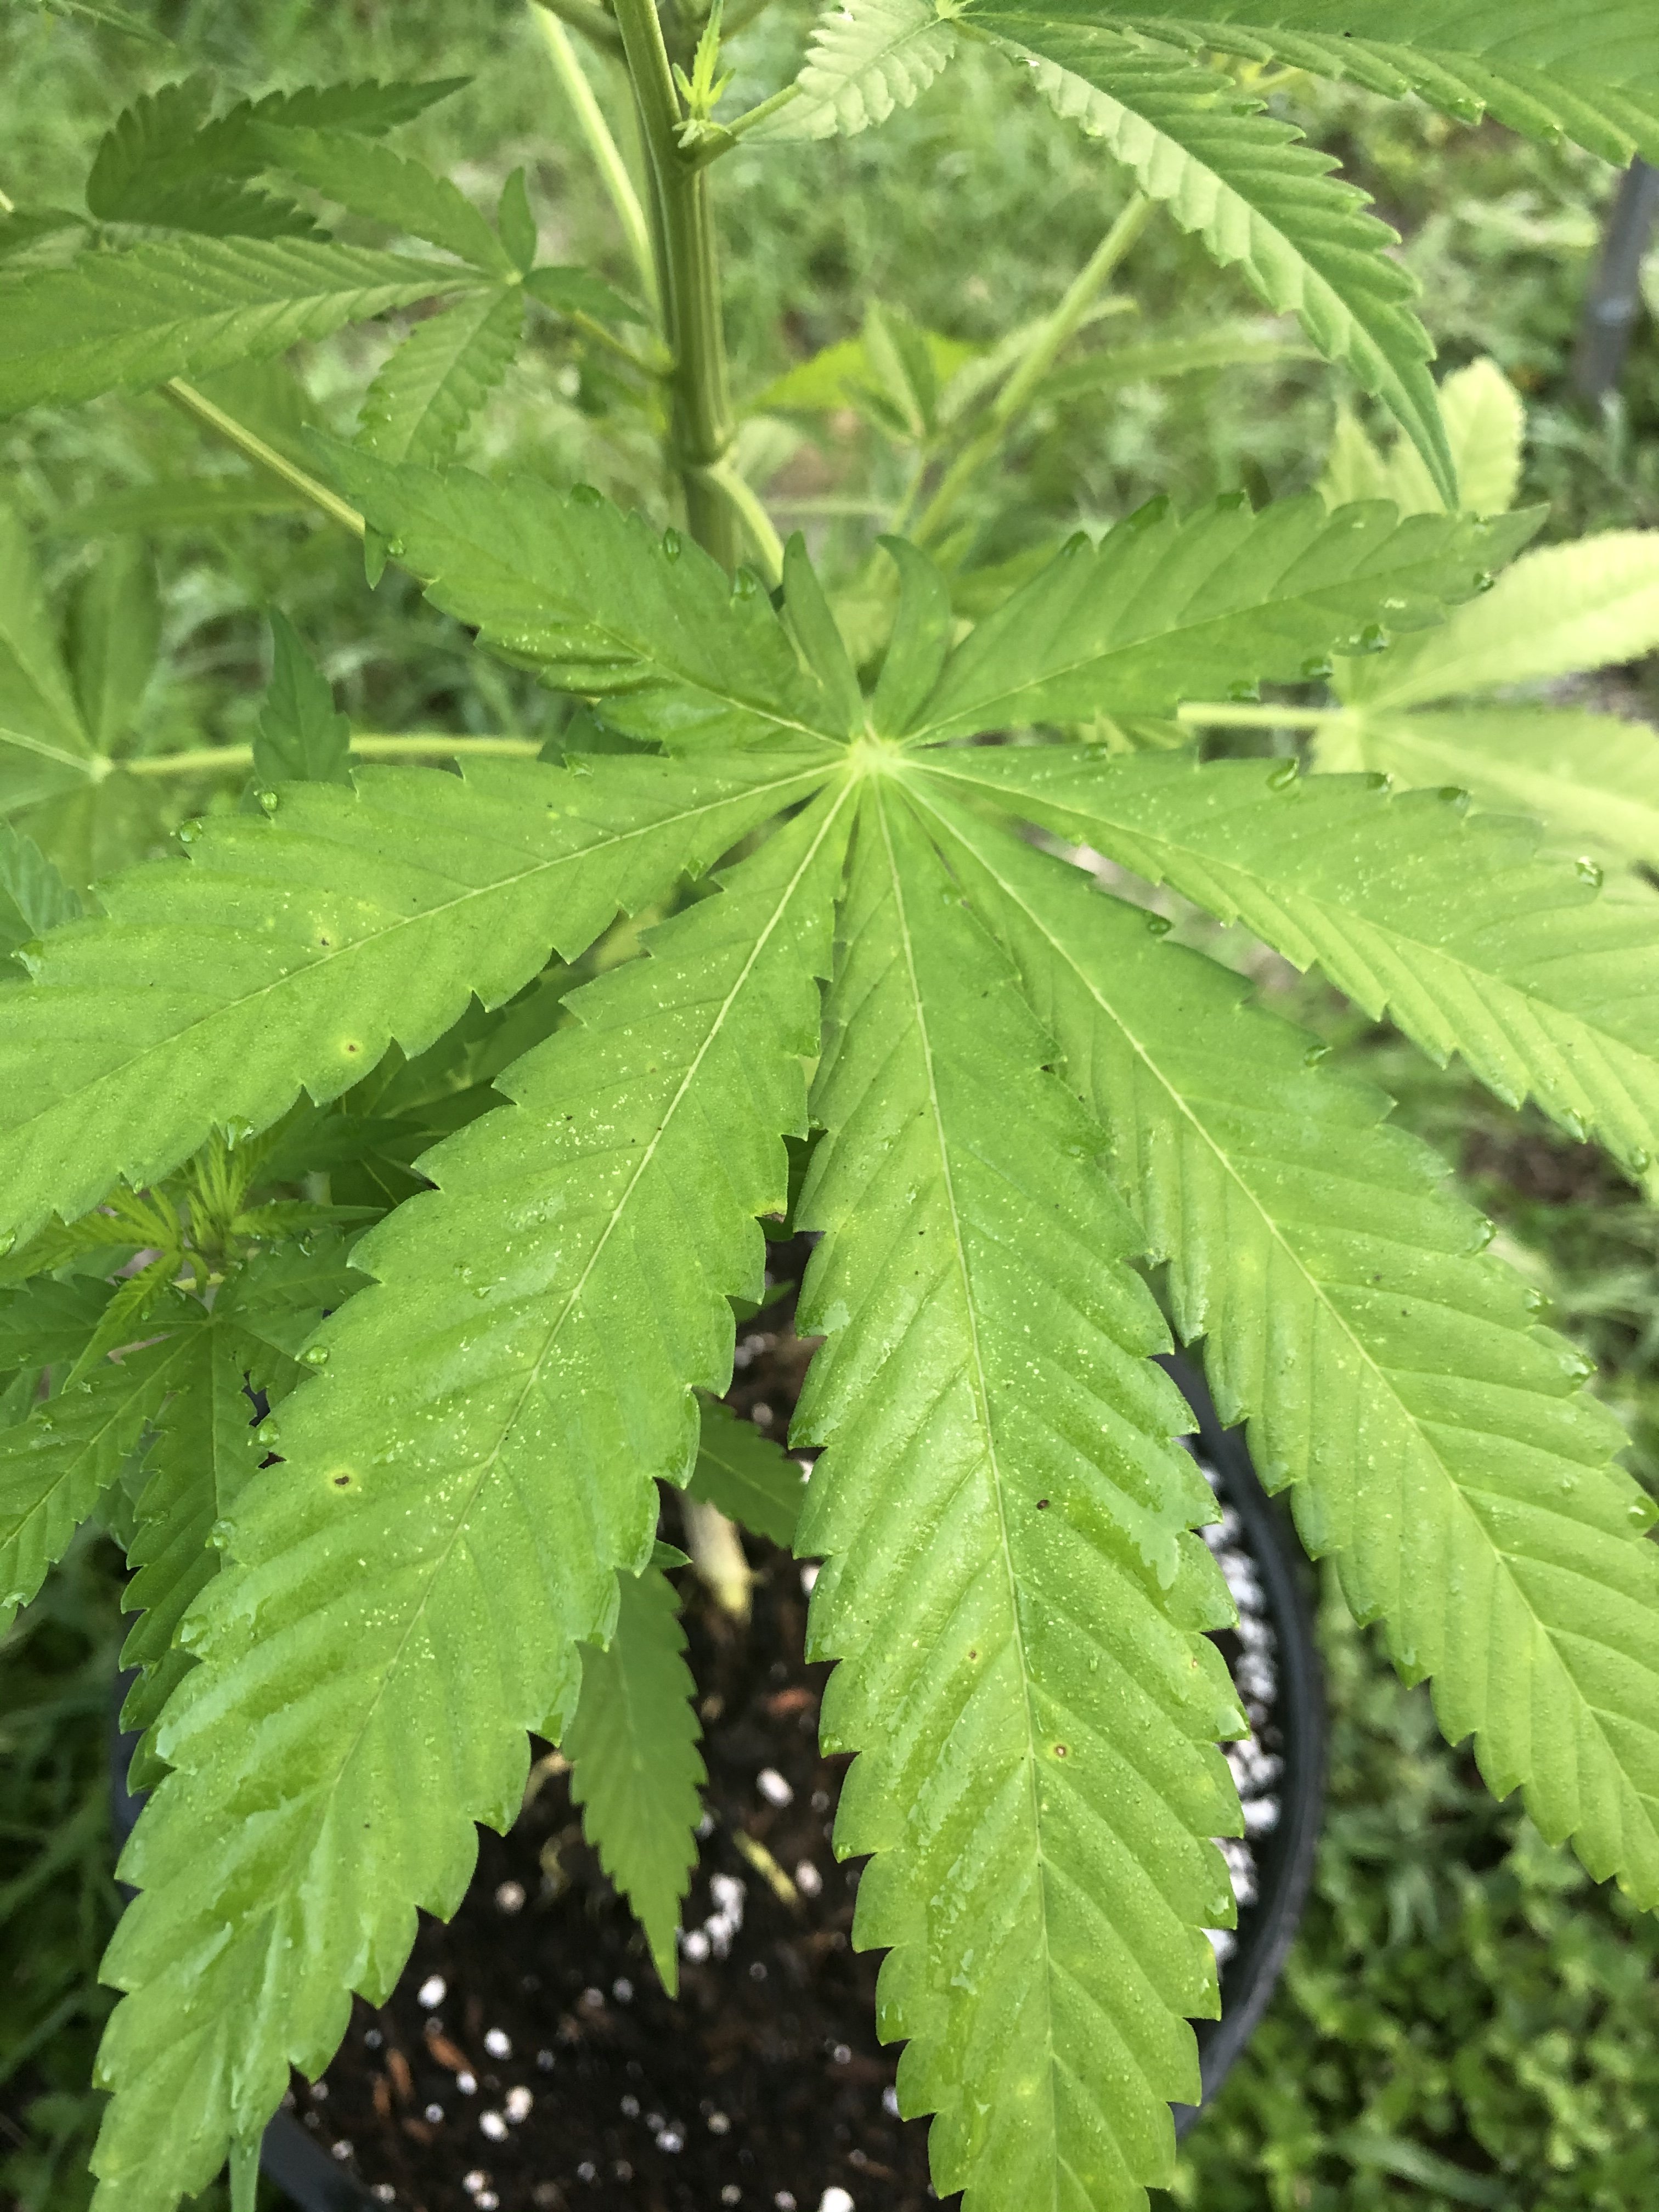 Yellow spots in leaves | Grasscity Forums - The #1 Marijuana Community ...